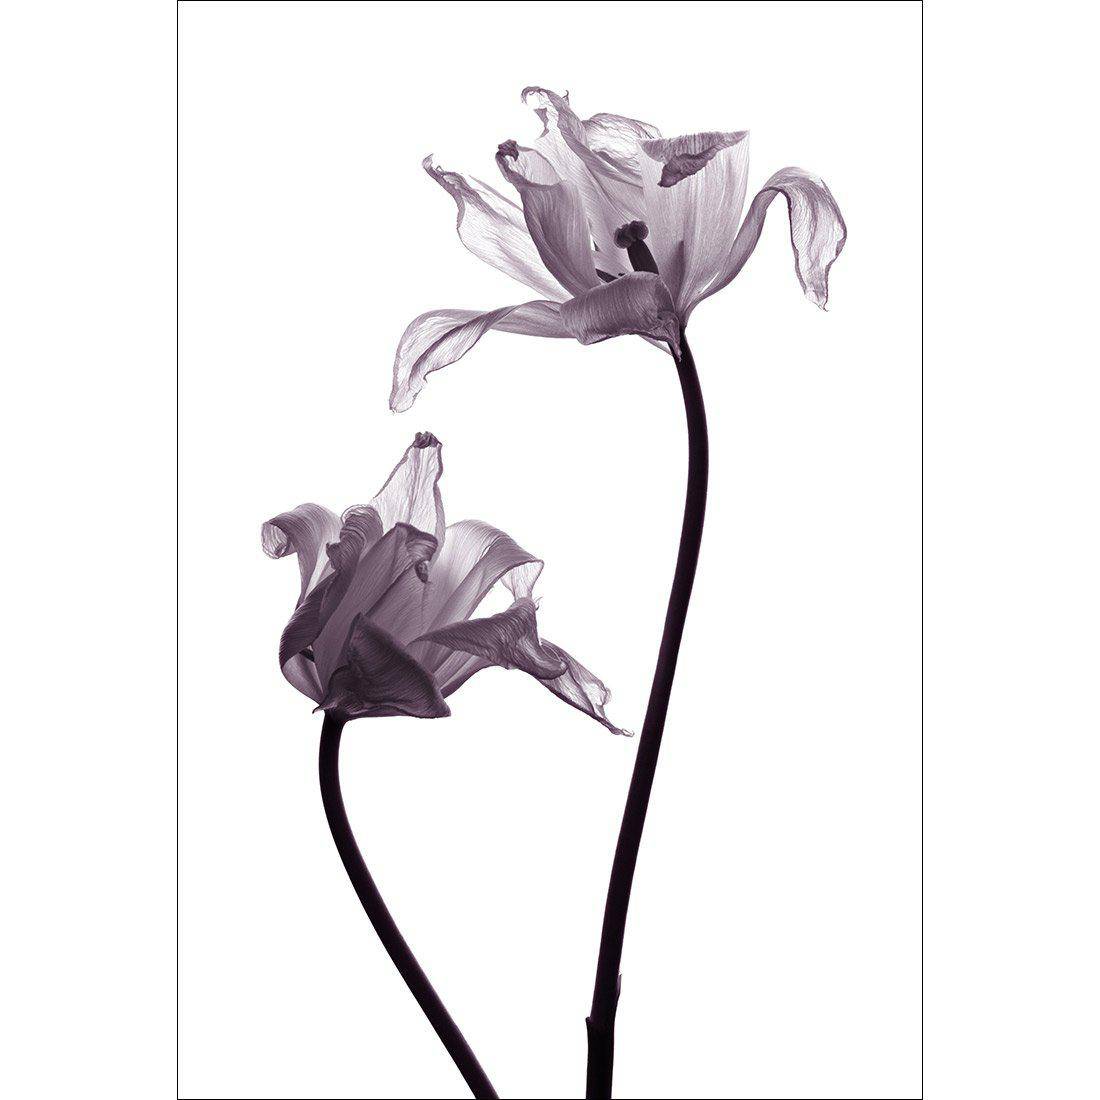 Tulip Transparency 1 Canvas Art-Canvas-Wall Art Designs-45x30cm-Canvas - No Frame-Wall Art Designs